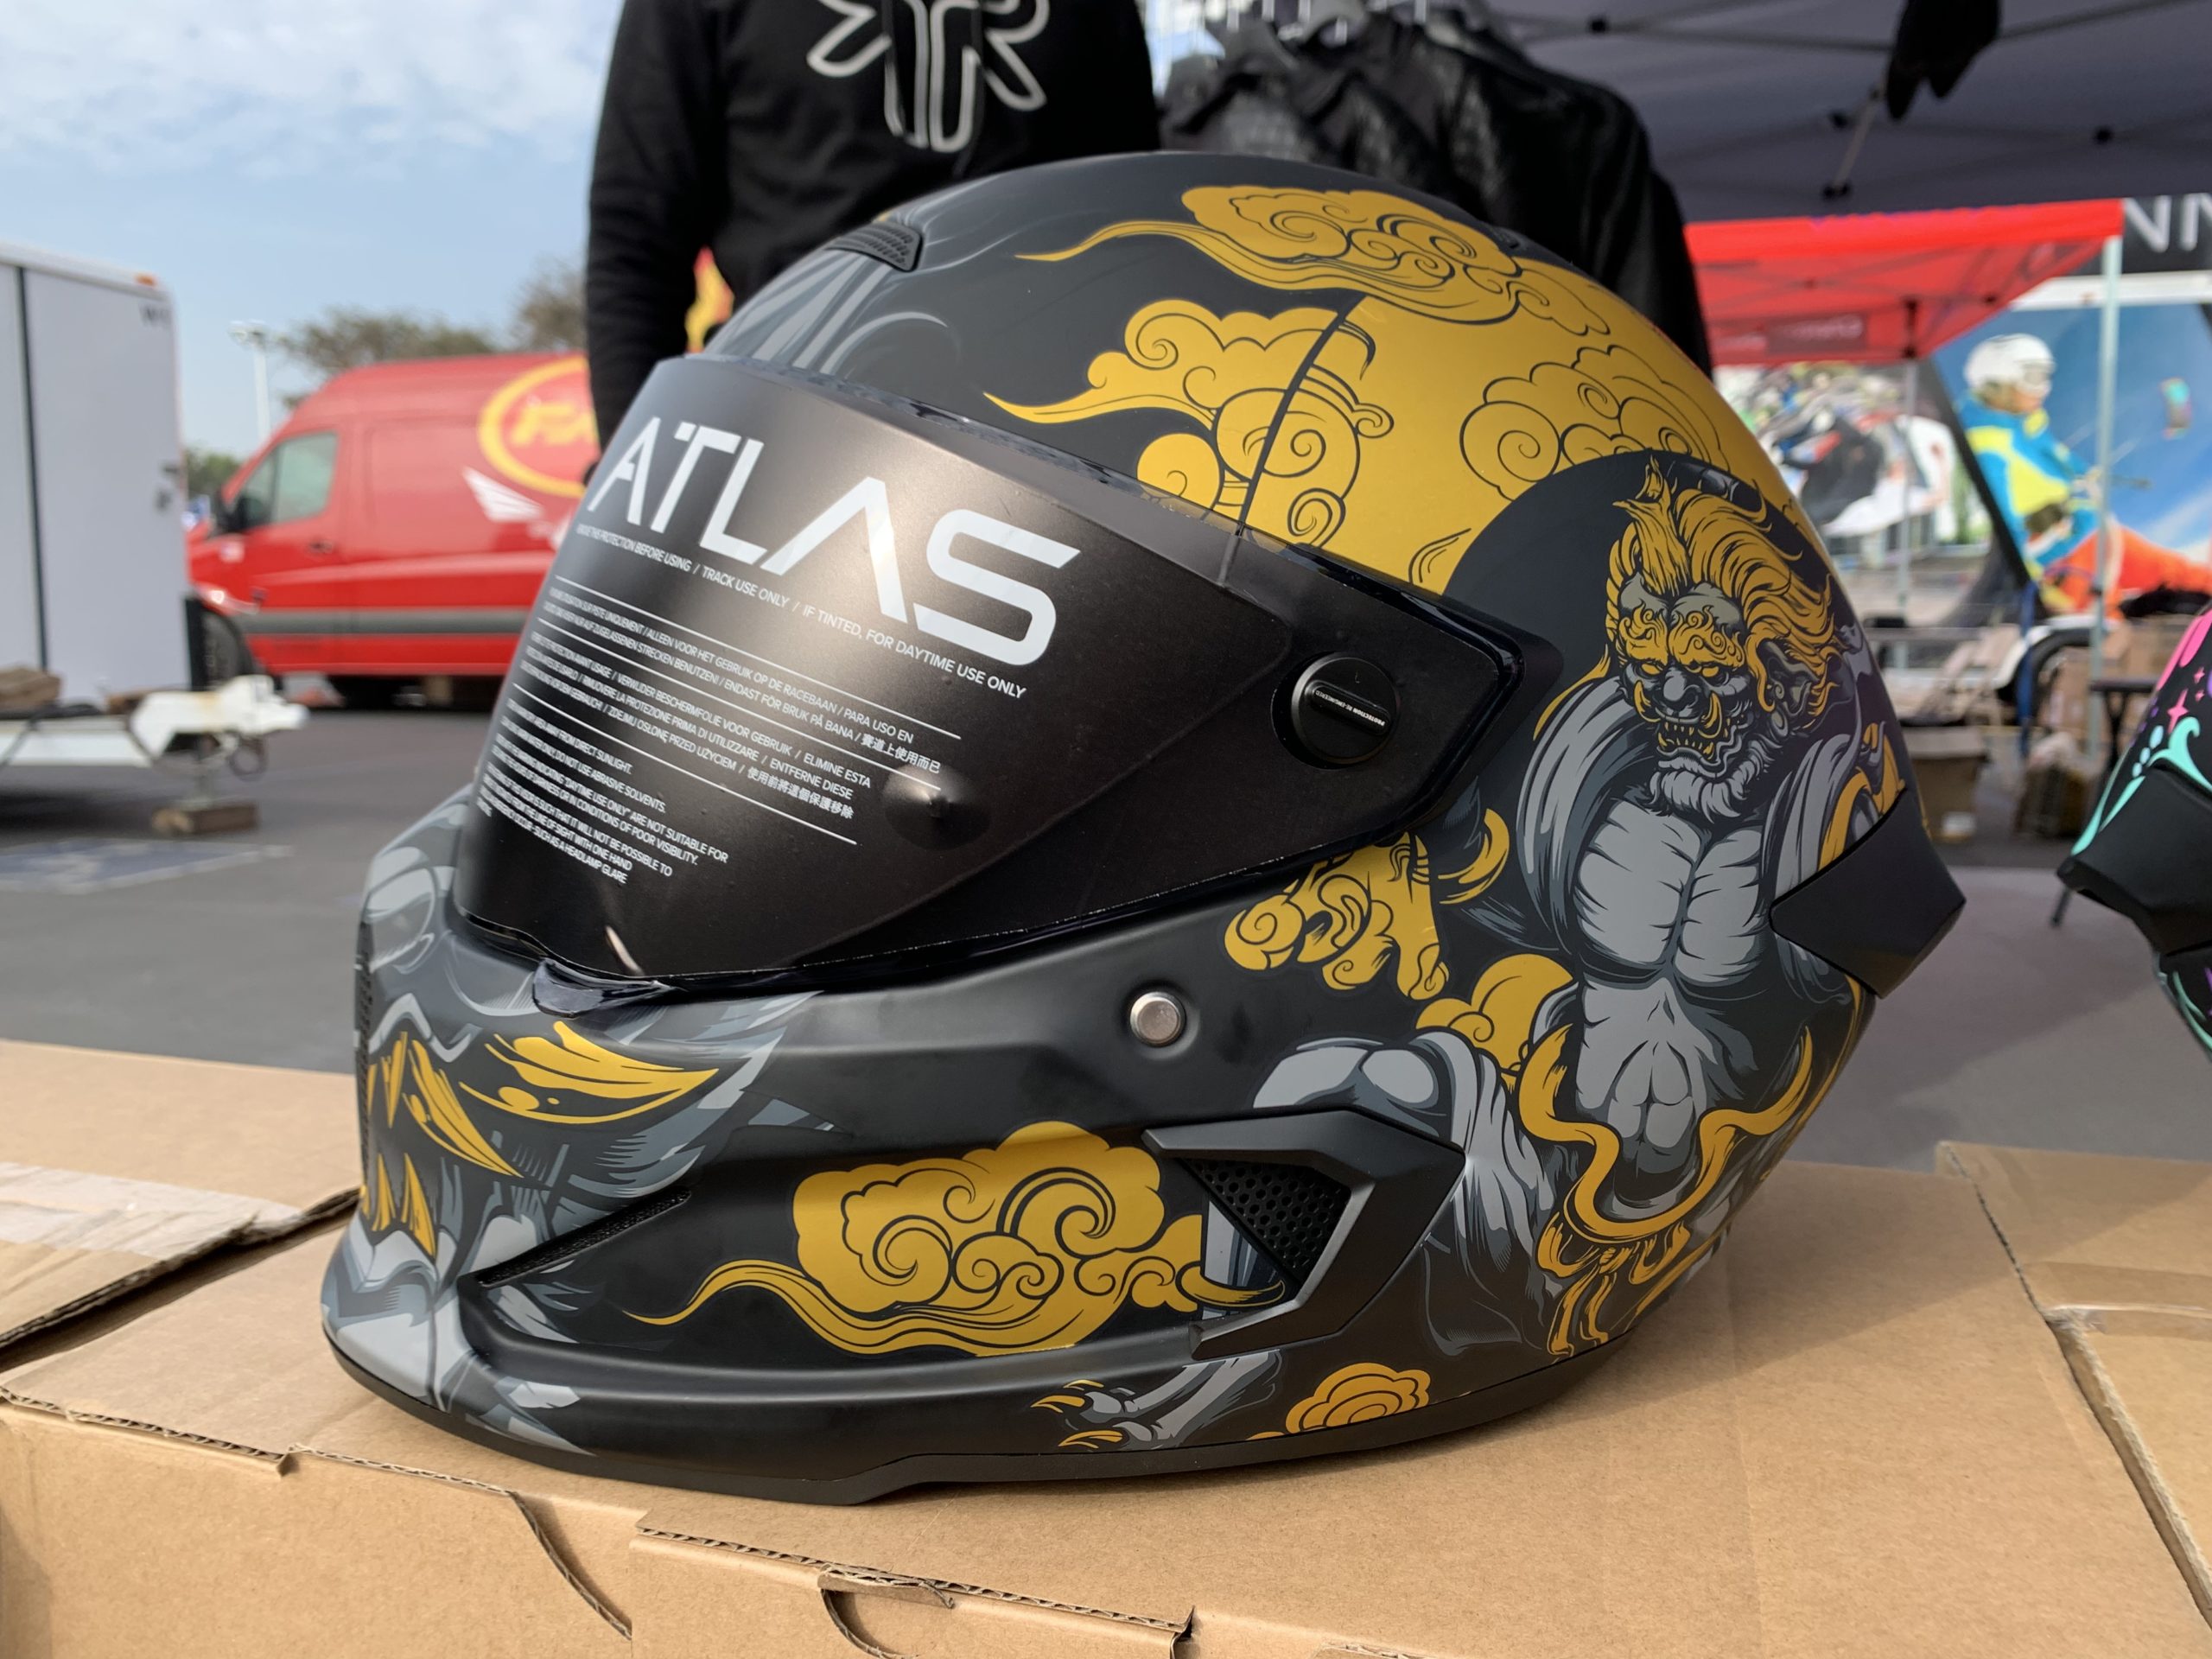 RUROC Atlas graphic helmet at IMS Outdoors 2021